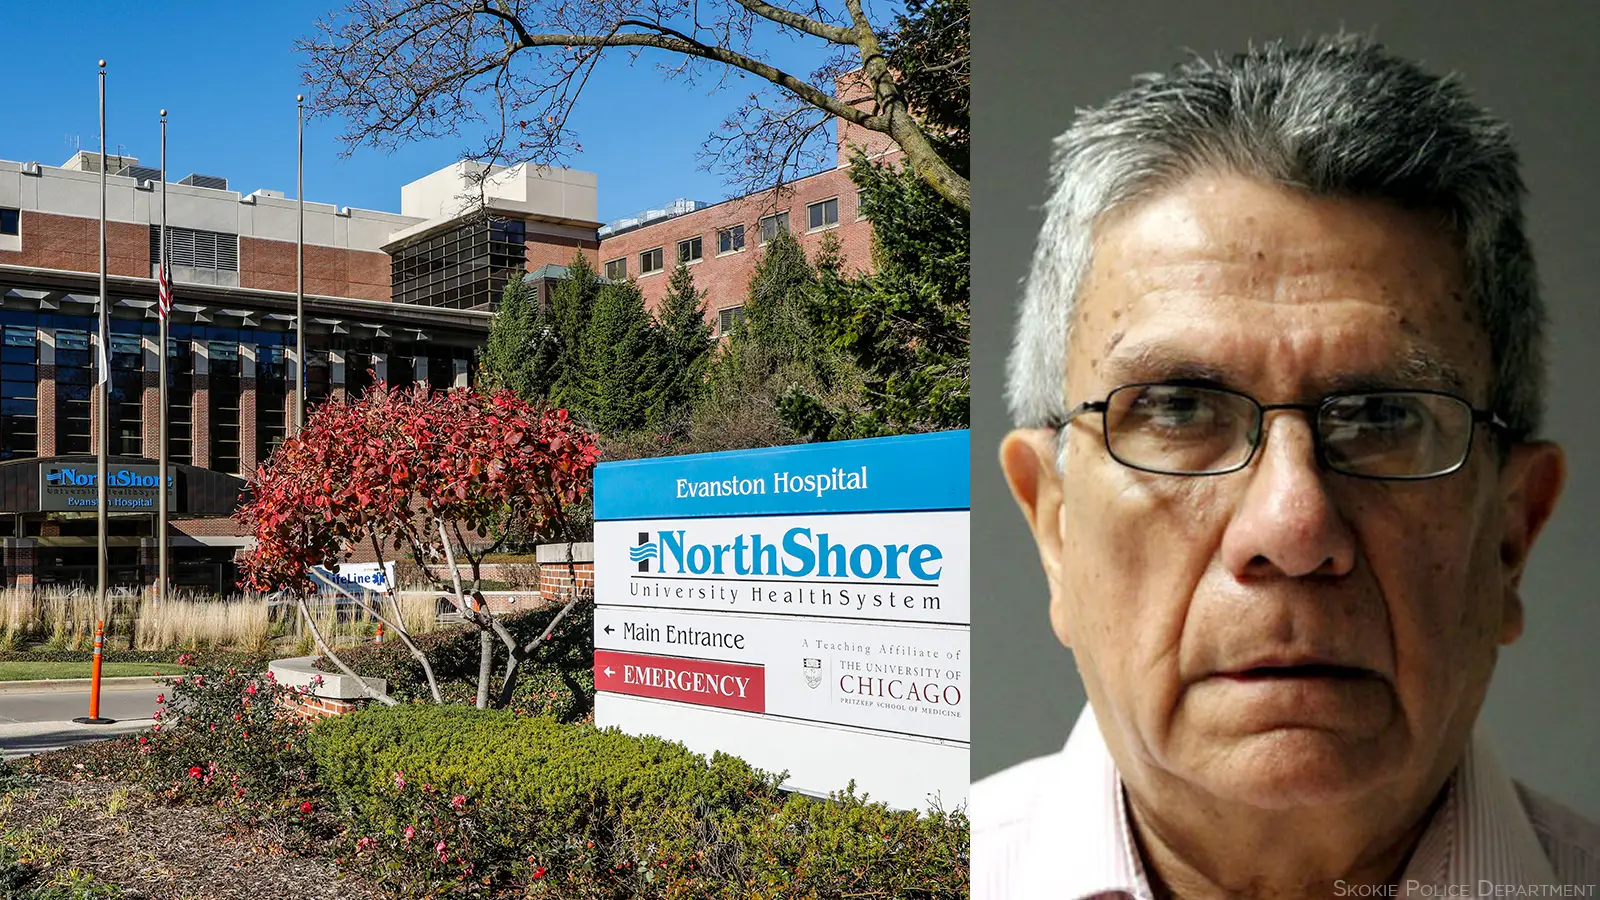 Jane Doe 42 alleges sexual assault by Gynecologist Fabio Ortega, NorthShore University HealthSystem